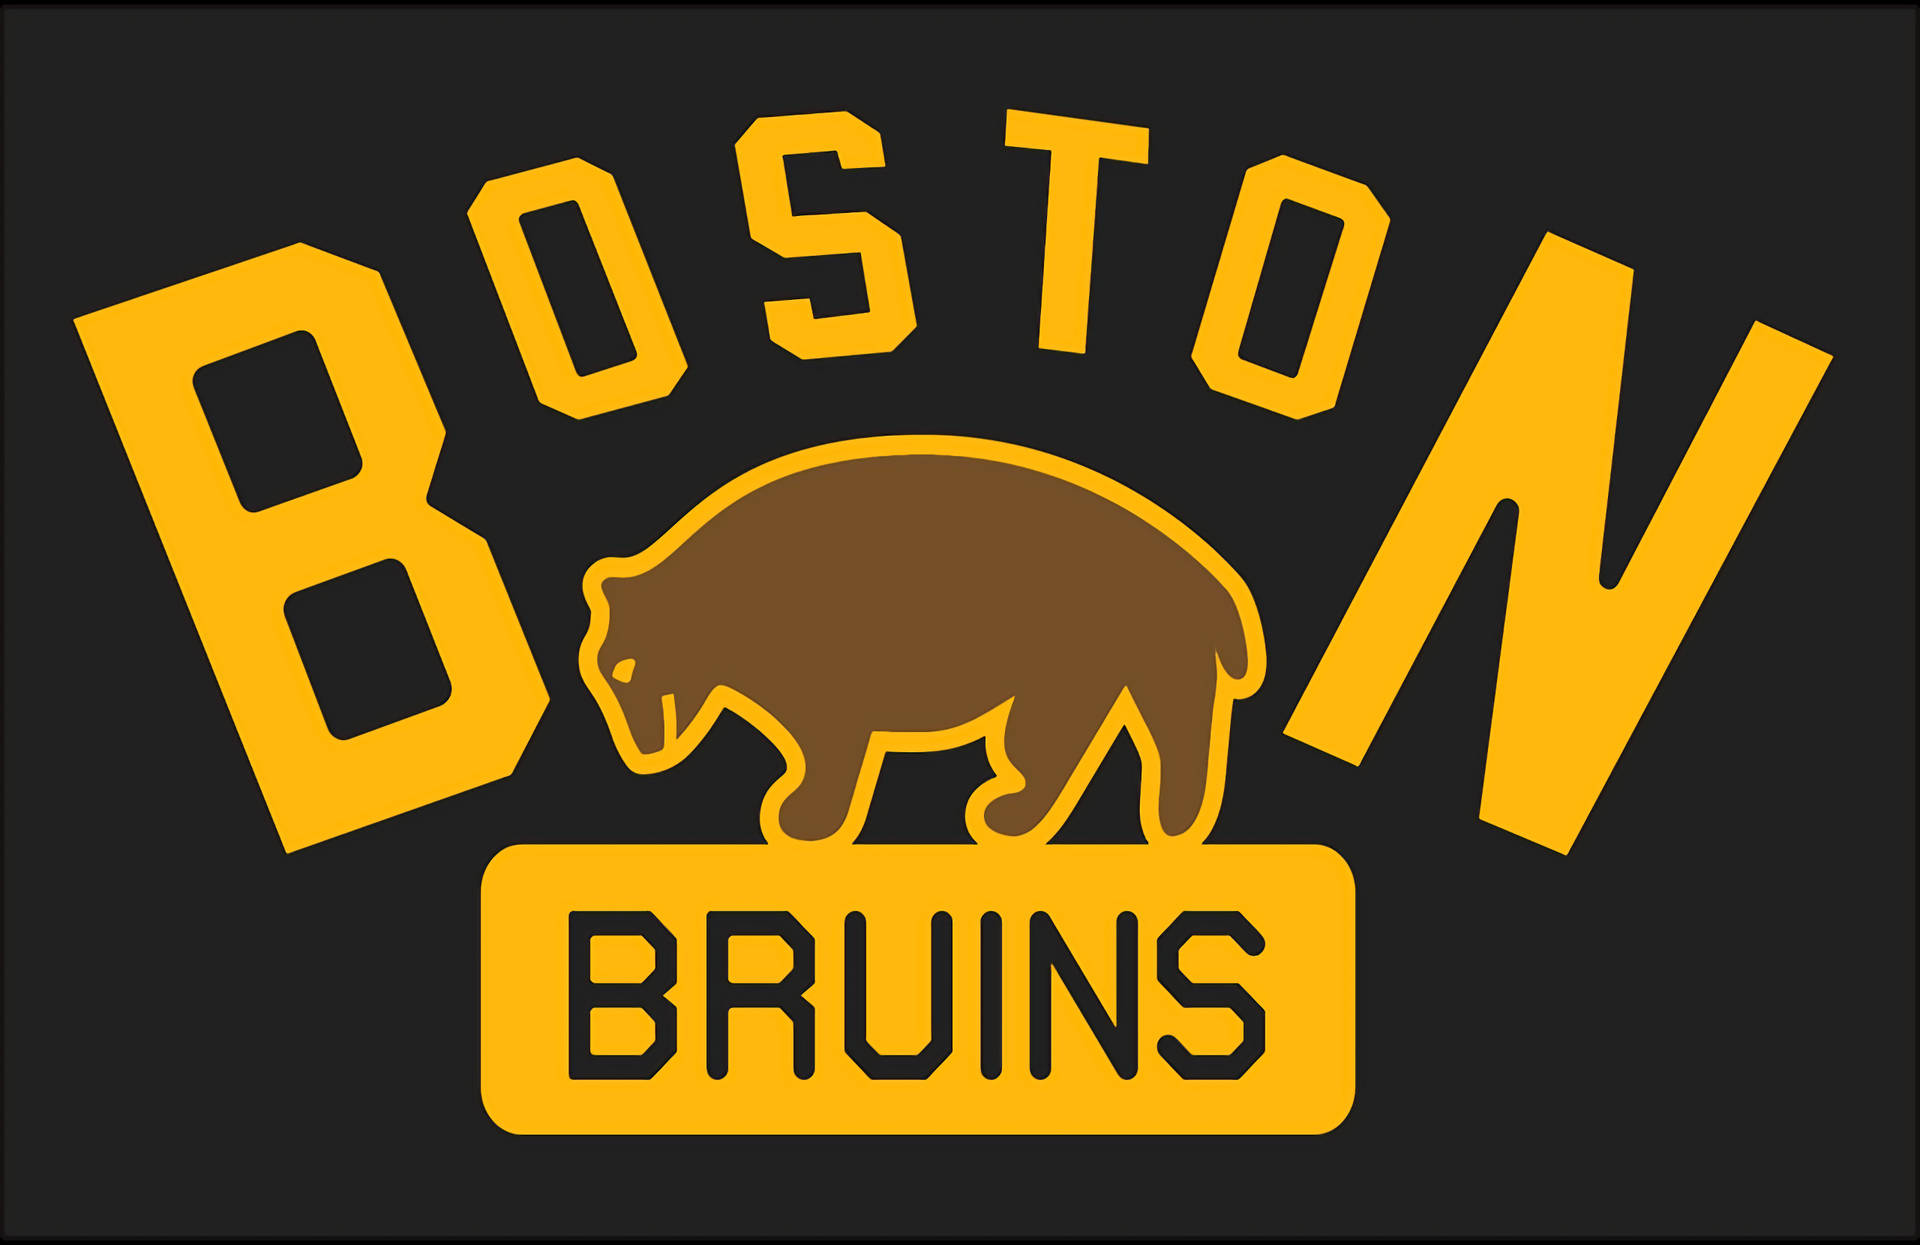 Majestic Boston Bruins Logo Background